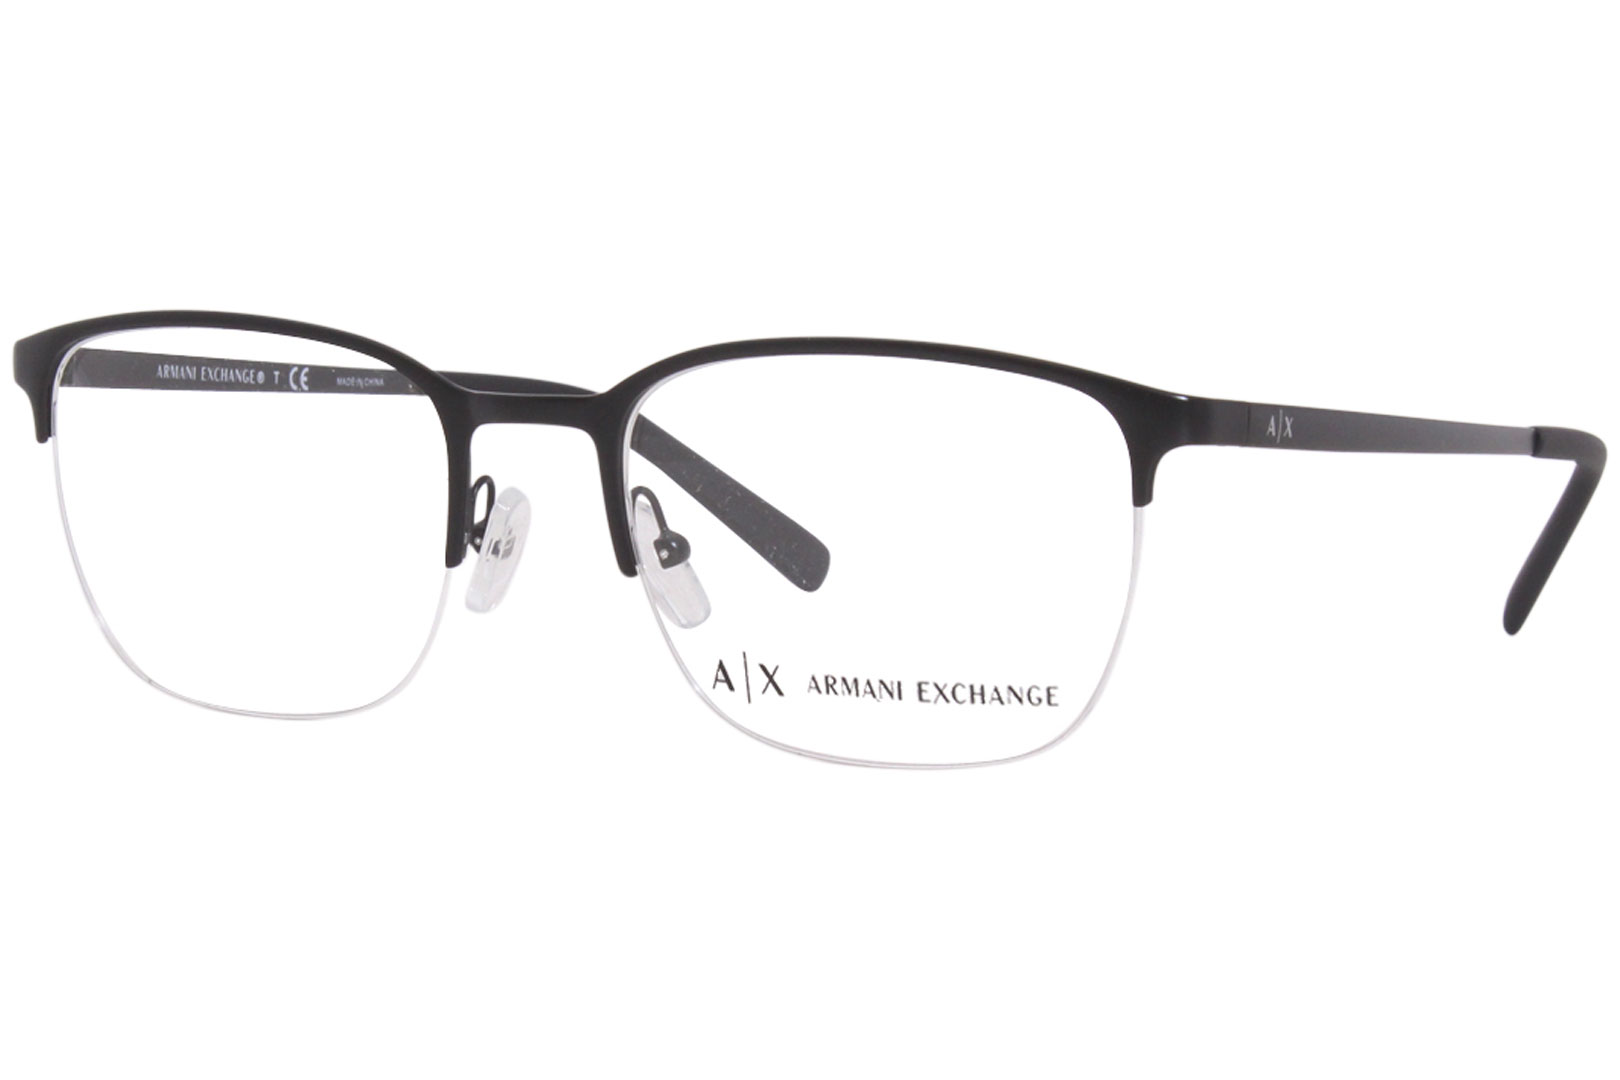 Armani Exchange AX1032 Eyeglasses Frame Men's Semi-Rim Rectangular ...